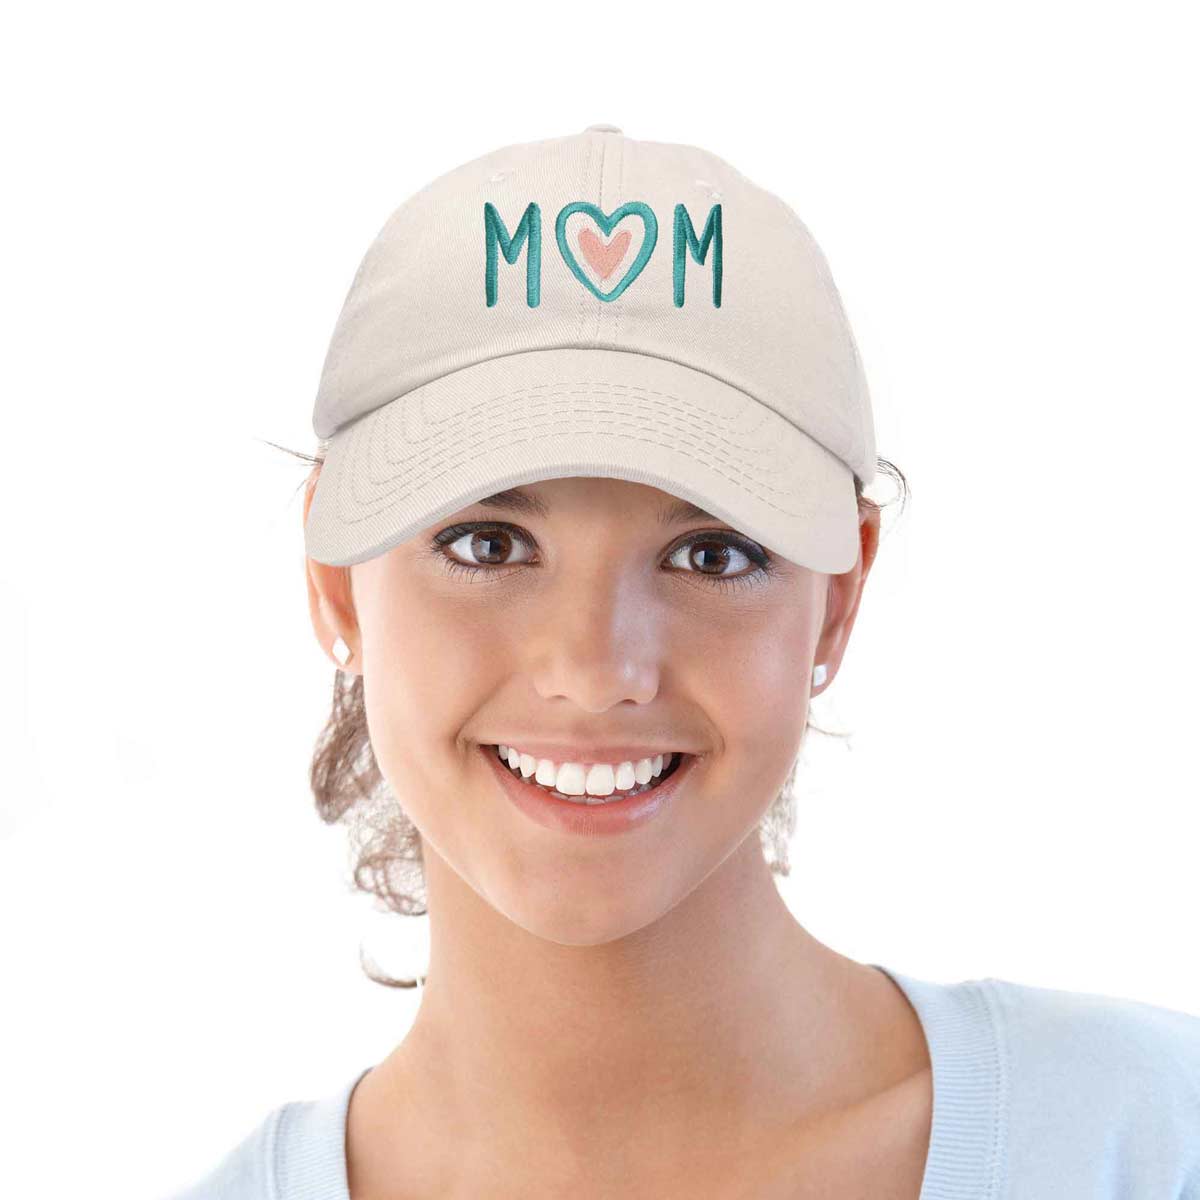 Dalix Heart Mom Hat